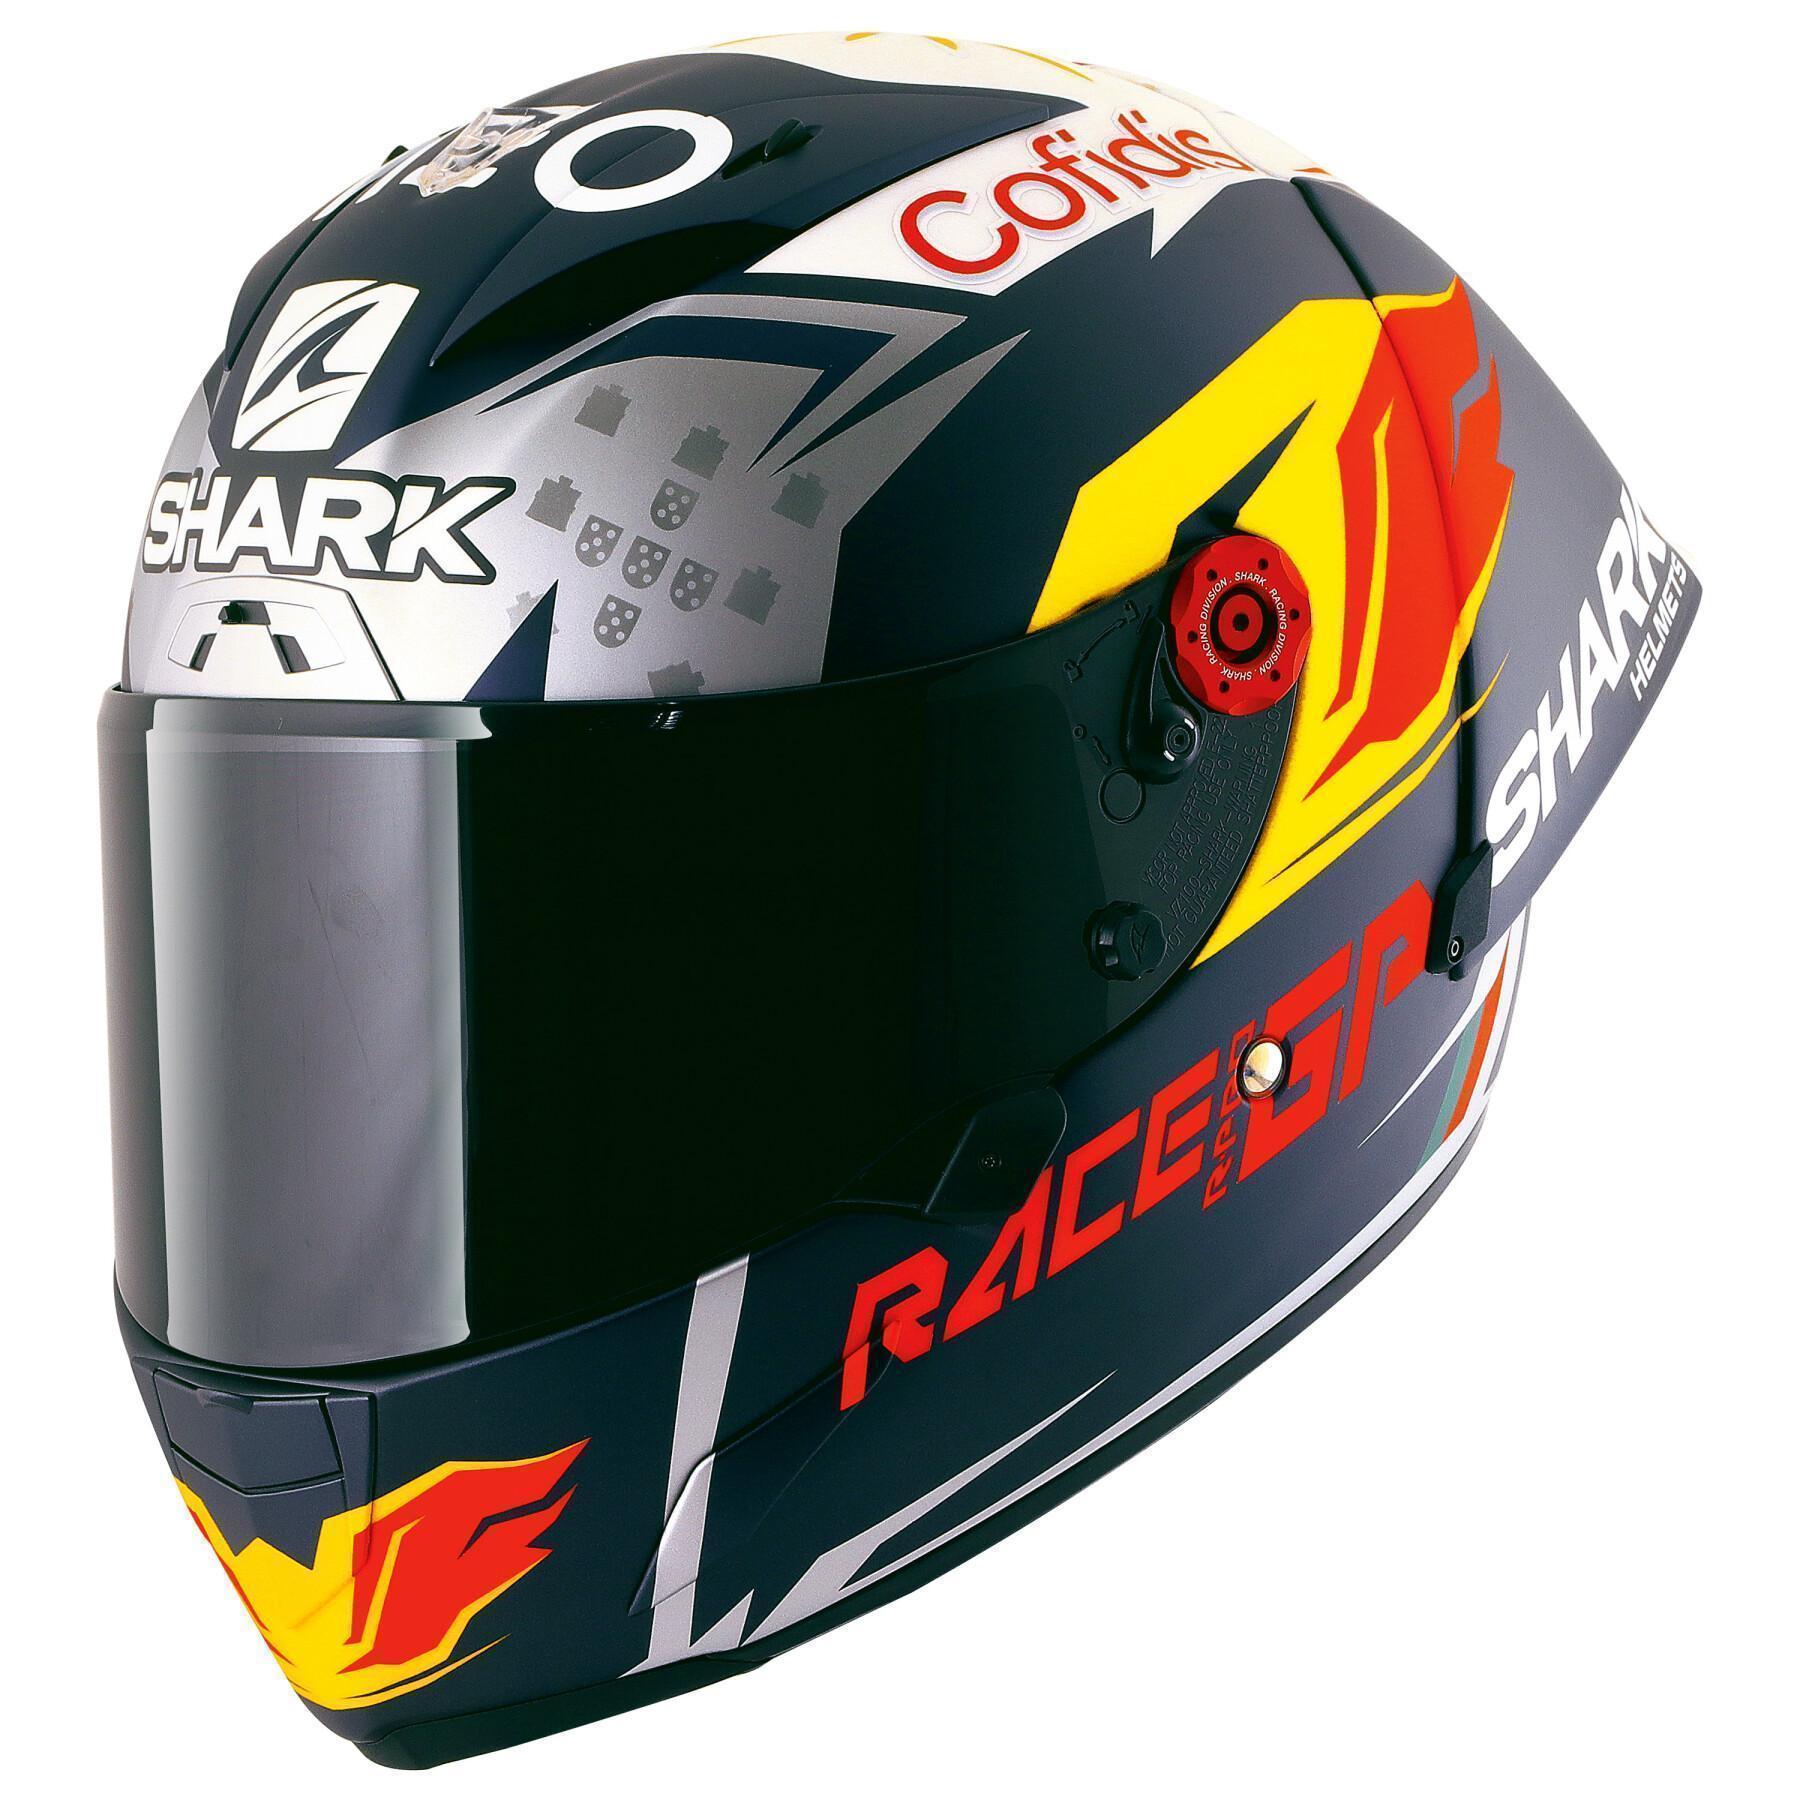 Full face motorcycle helmet Shark race-r pro GP oliveira signature